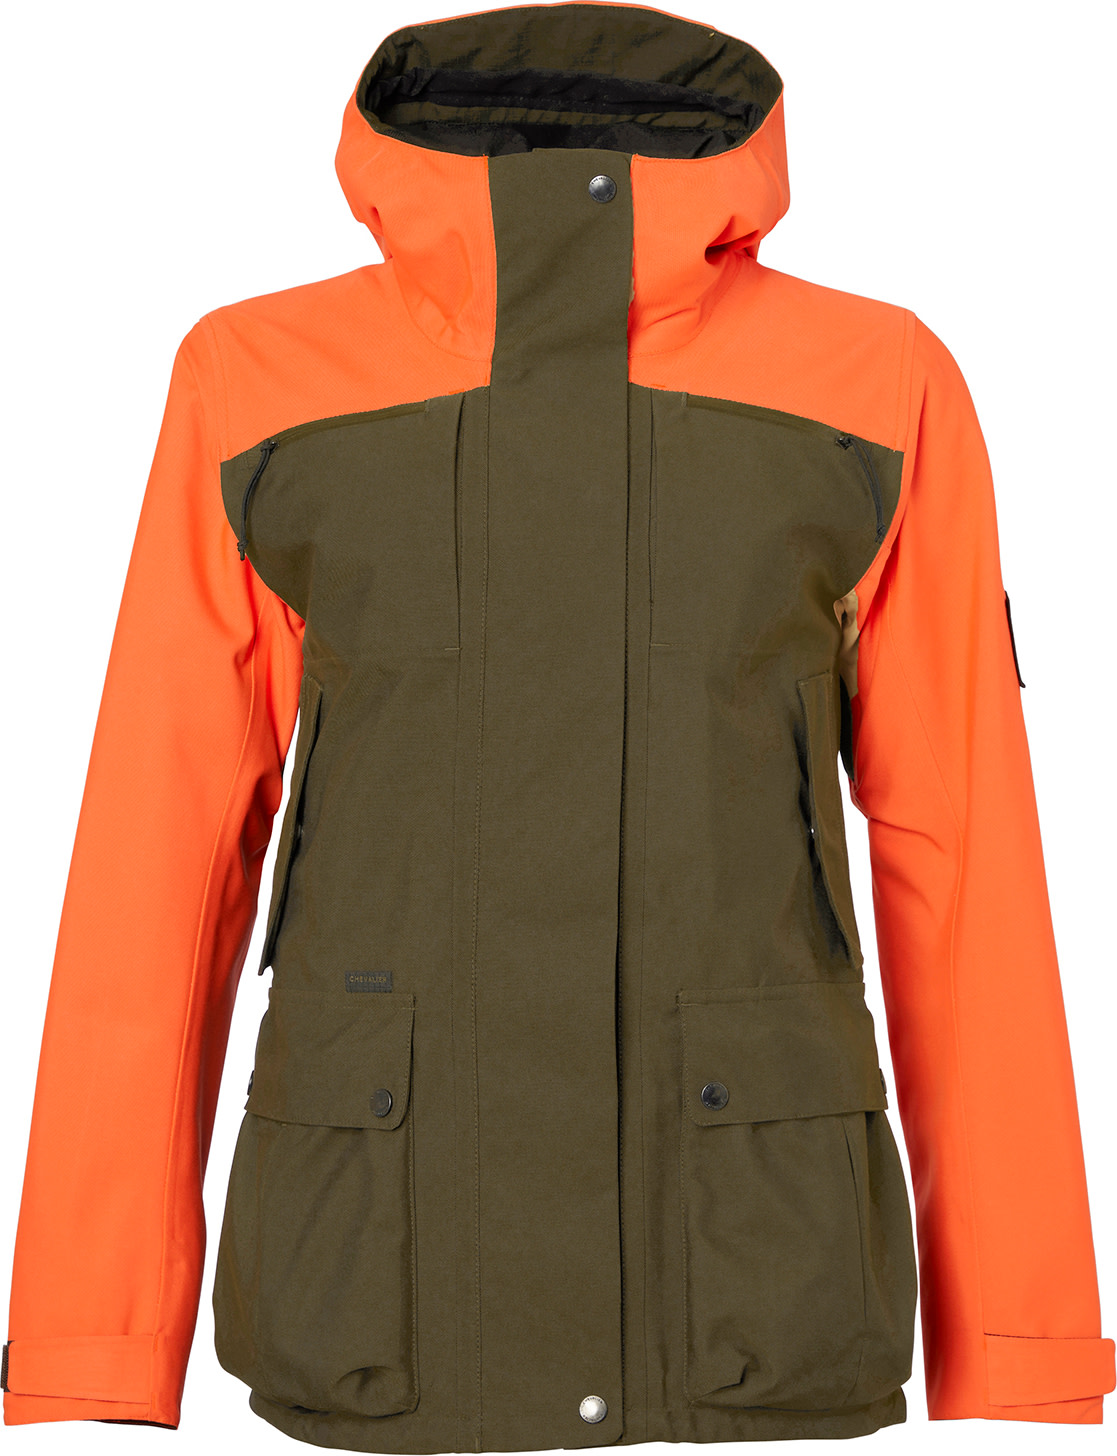 Women's Endeavor Chevalite Jacket 2.0 High Vis Orange